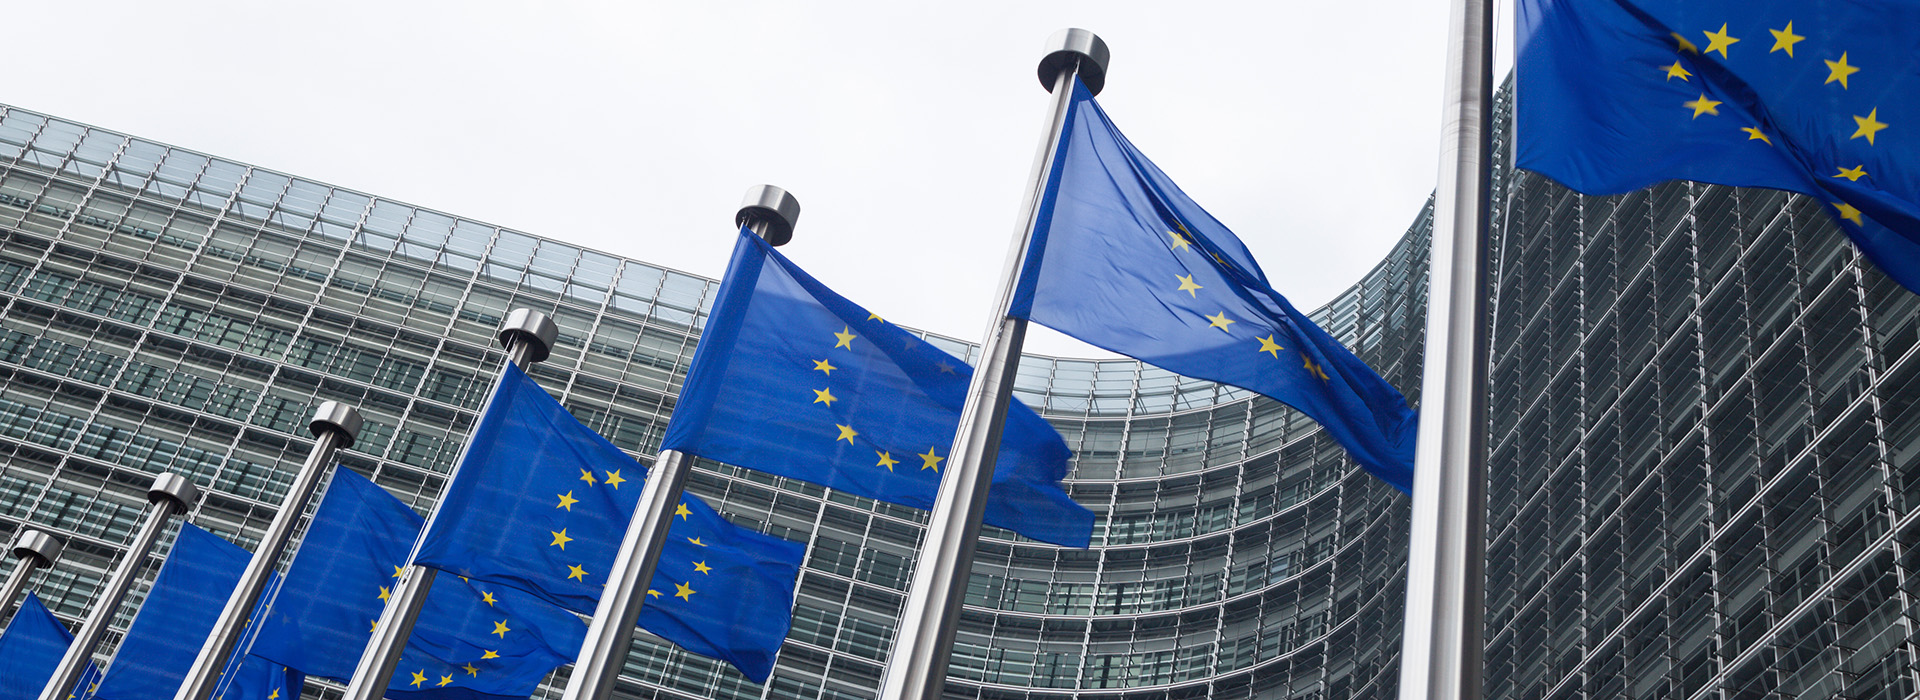 European Union flags in front of European Commission headquarter in Brussels, Belgium